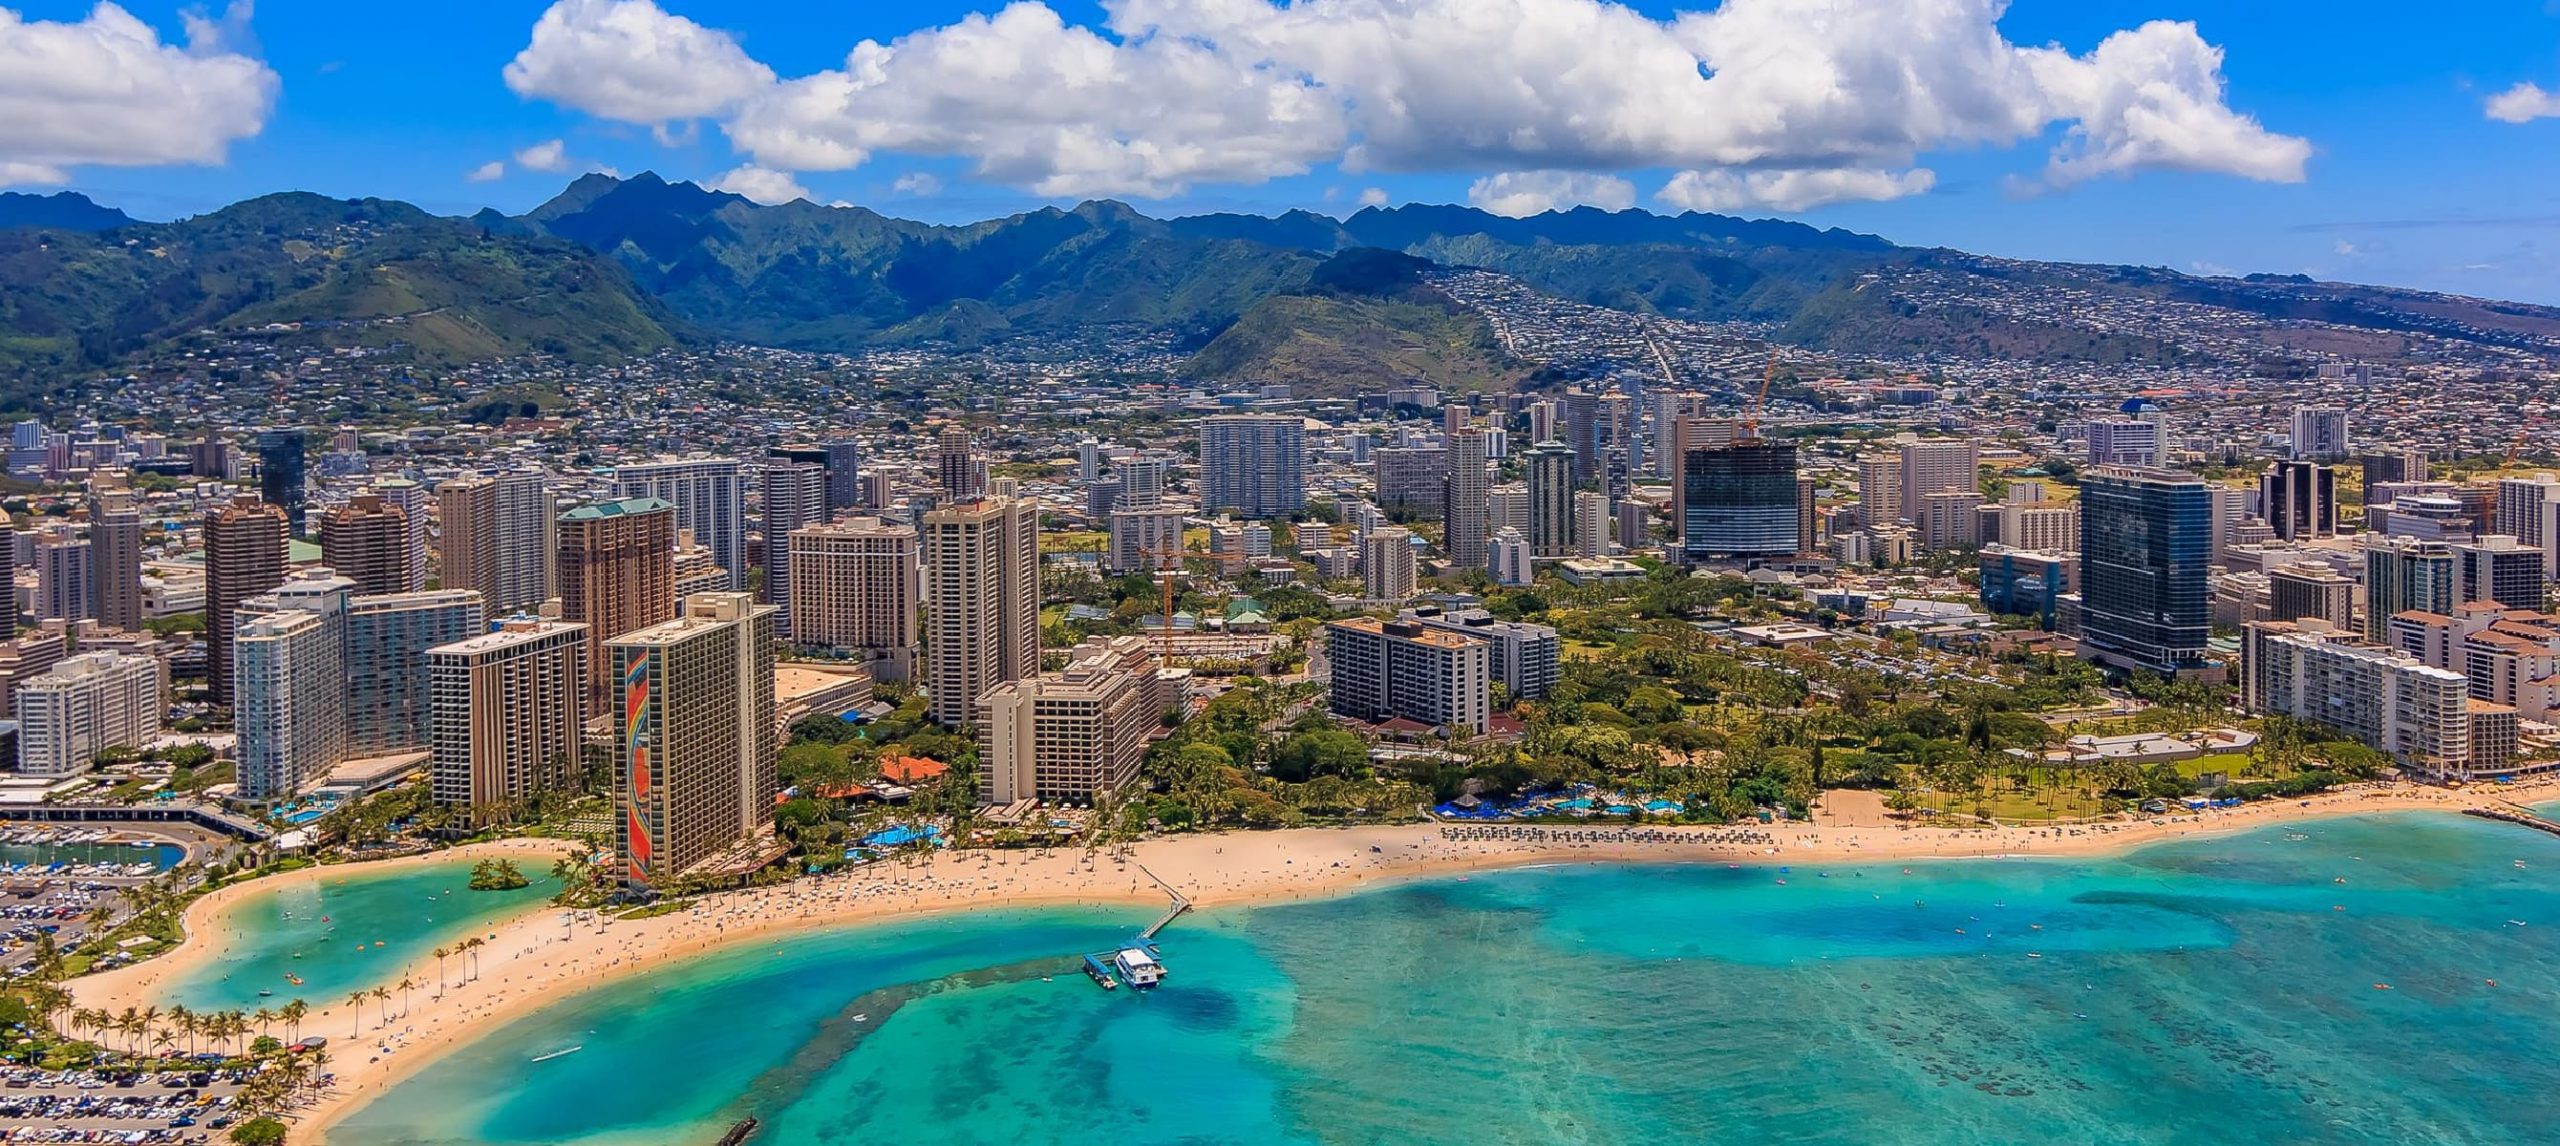 The 5 Best Hotels In Waikiki, Honolulu